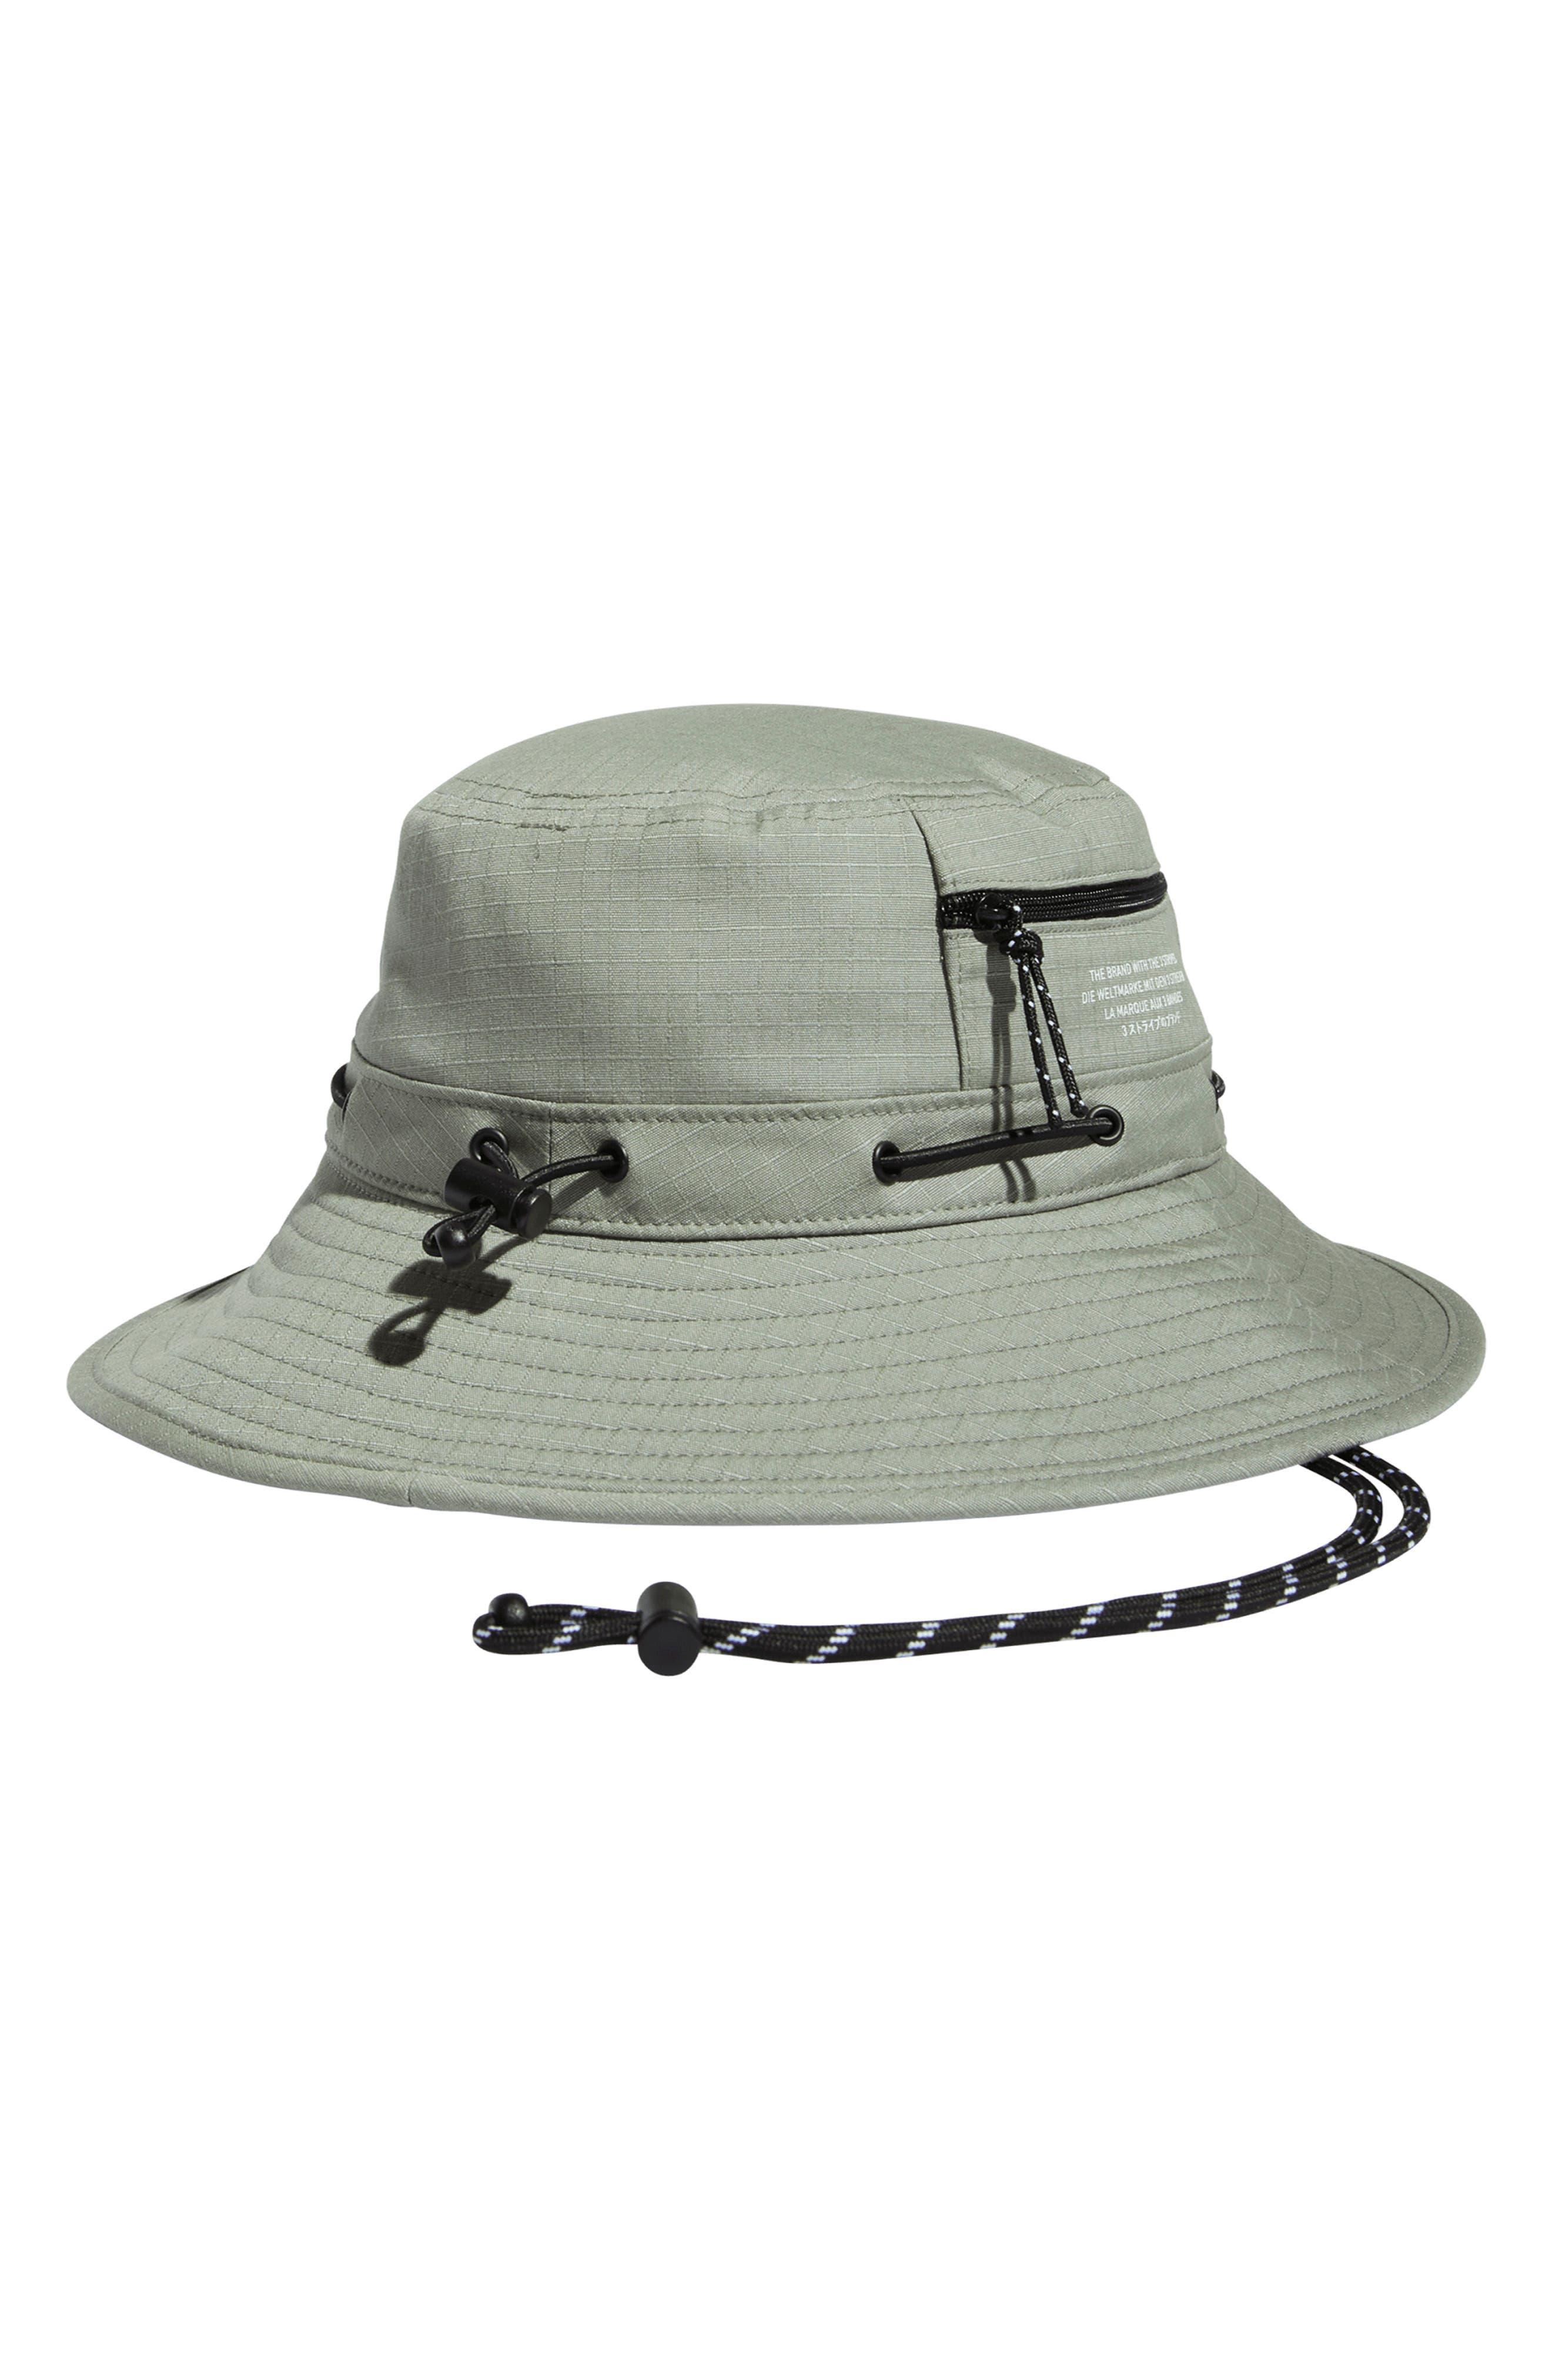 adidas Originals Utility 2.0 Cotton Ripstop Boonie Hat in Gray | Lyst